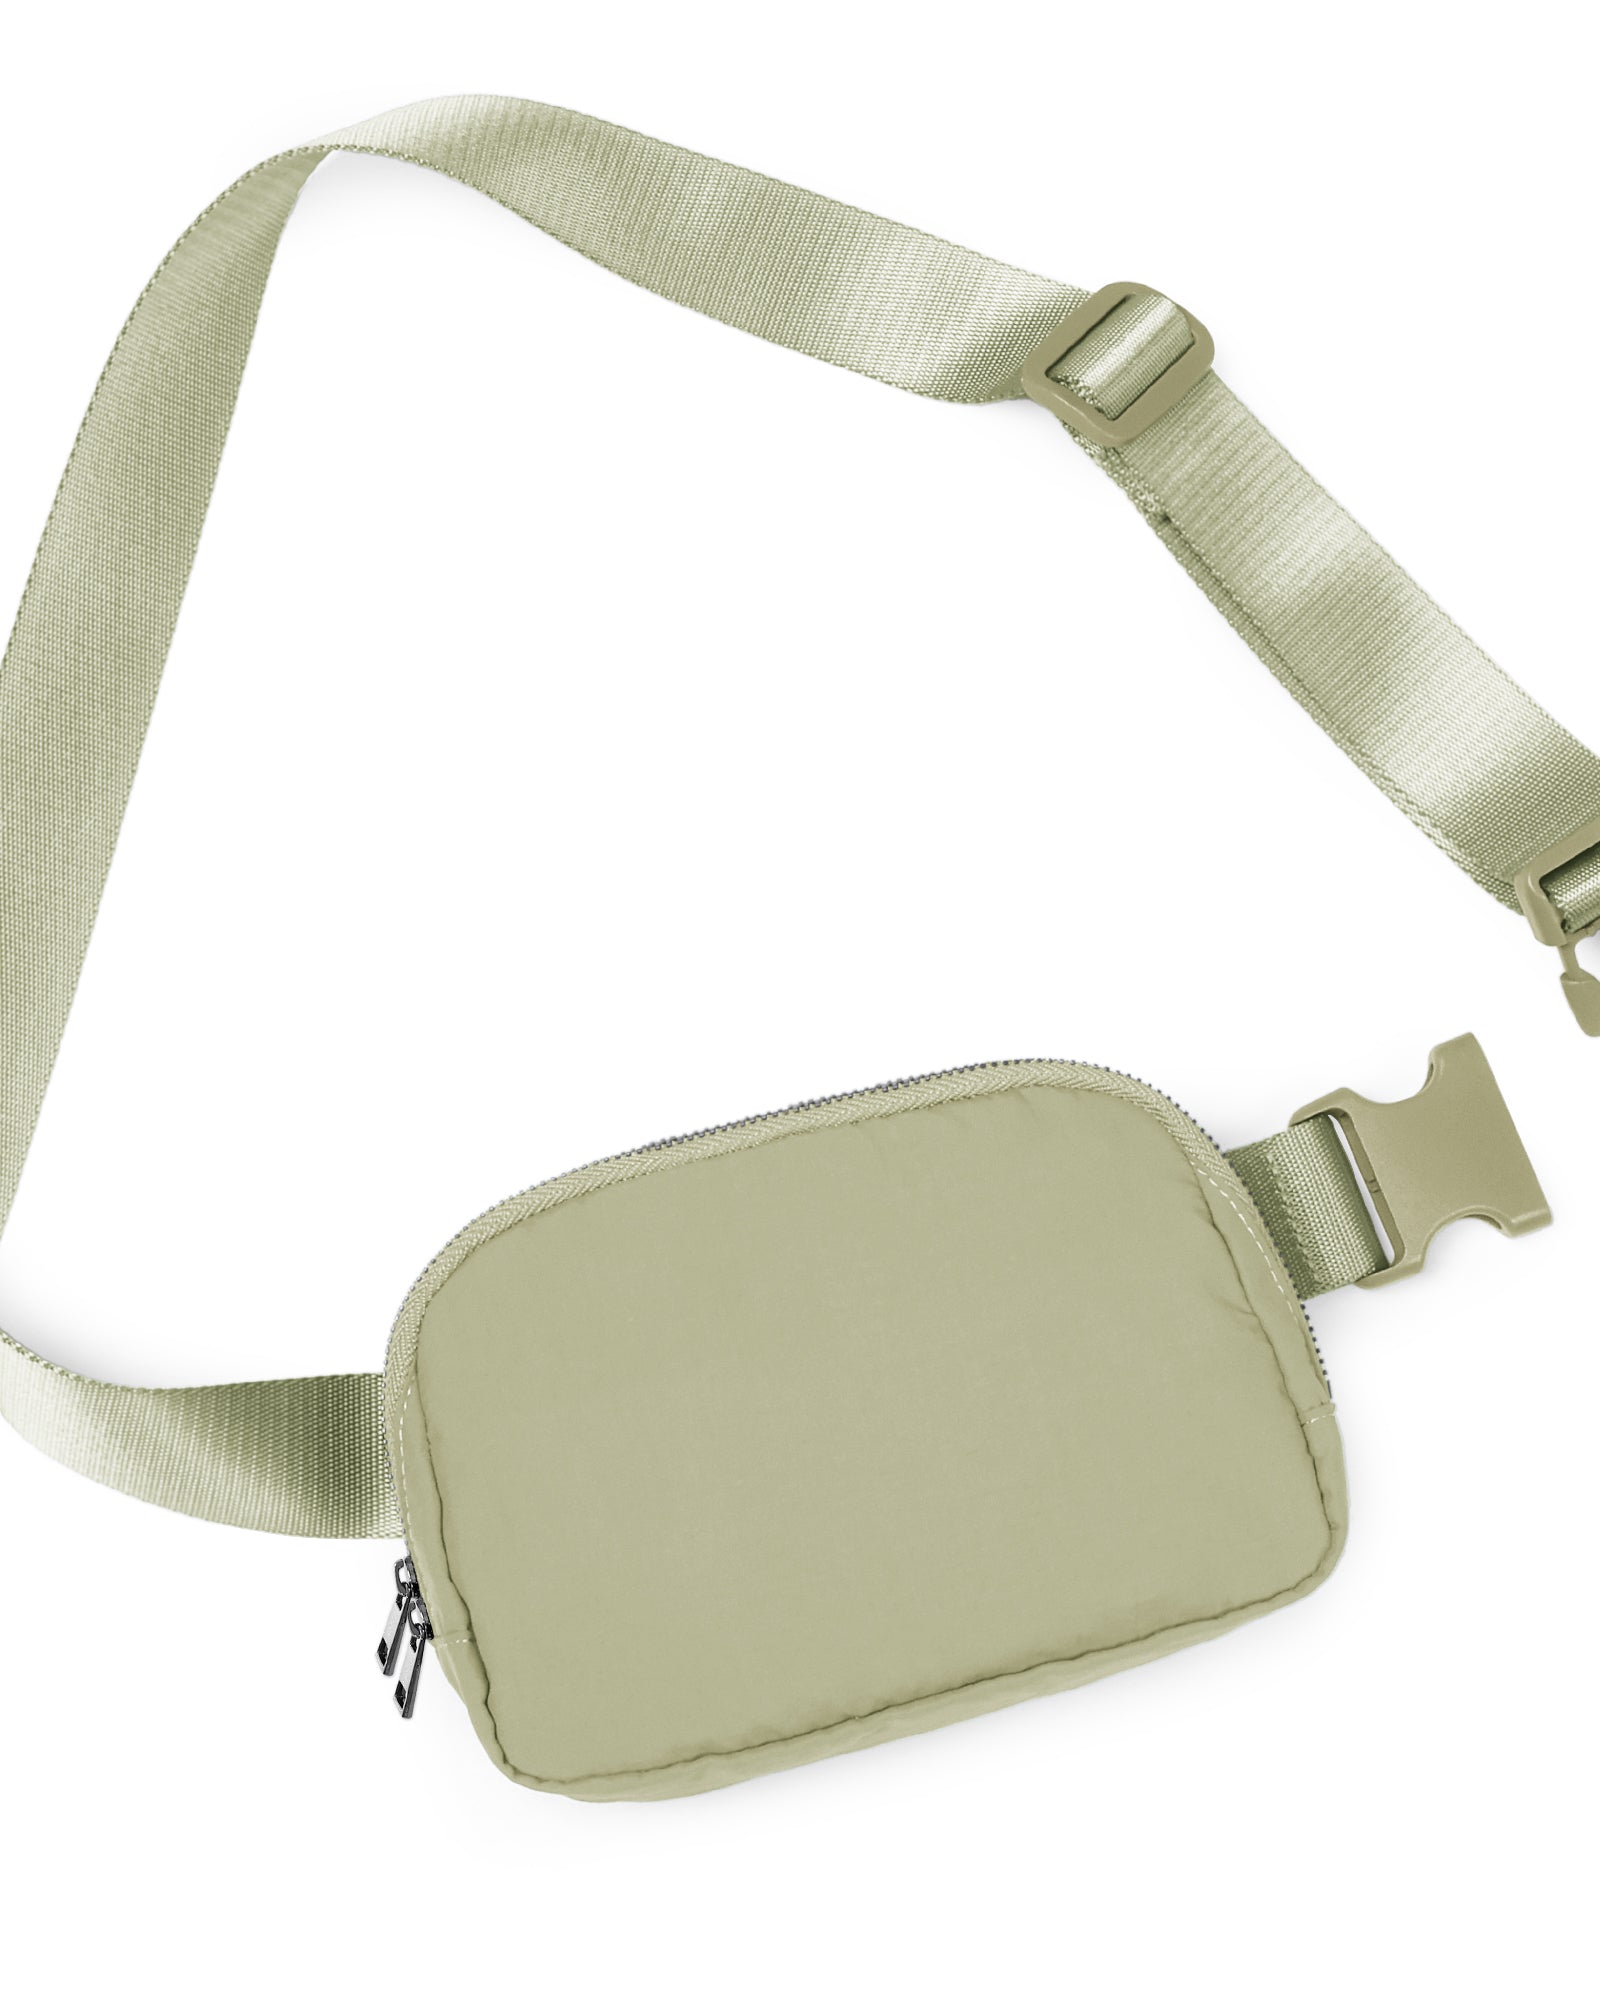 Unisex Two-Way Zip Mini Belt Bag Khaki Green 8" x 2" x 5.5" - ododos